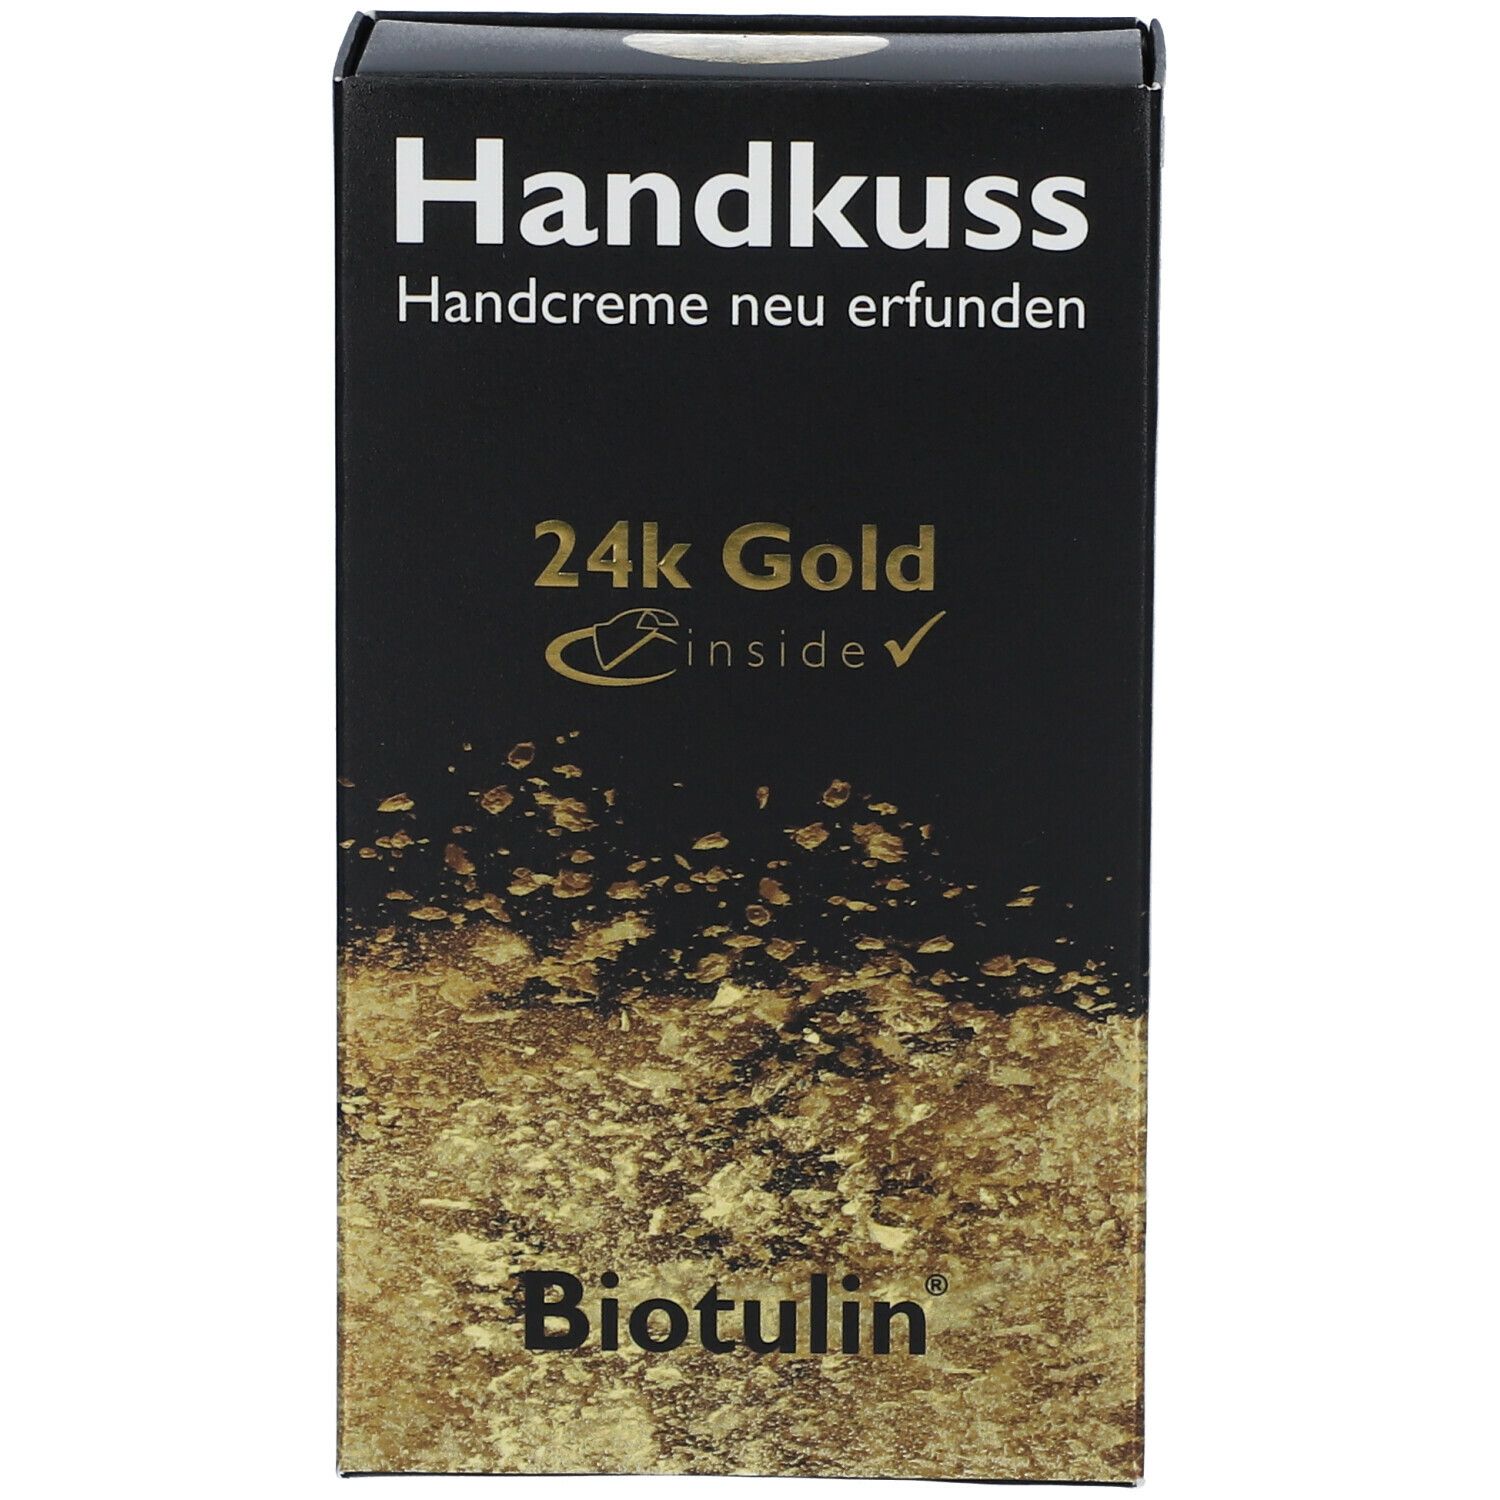 Biotulin® Handkuss: Handcreme neu erfunden